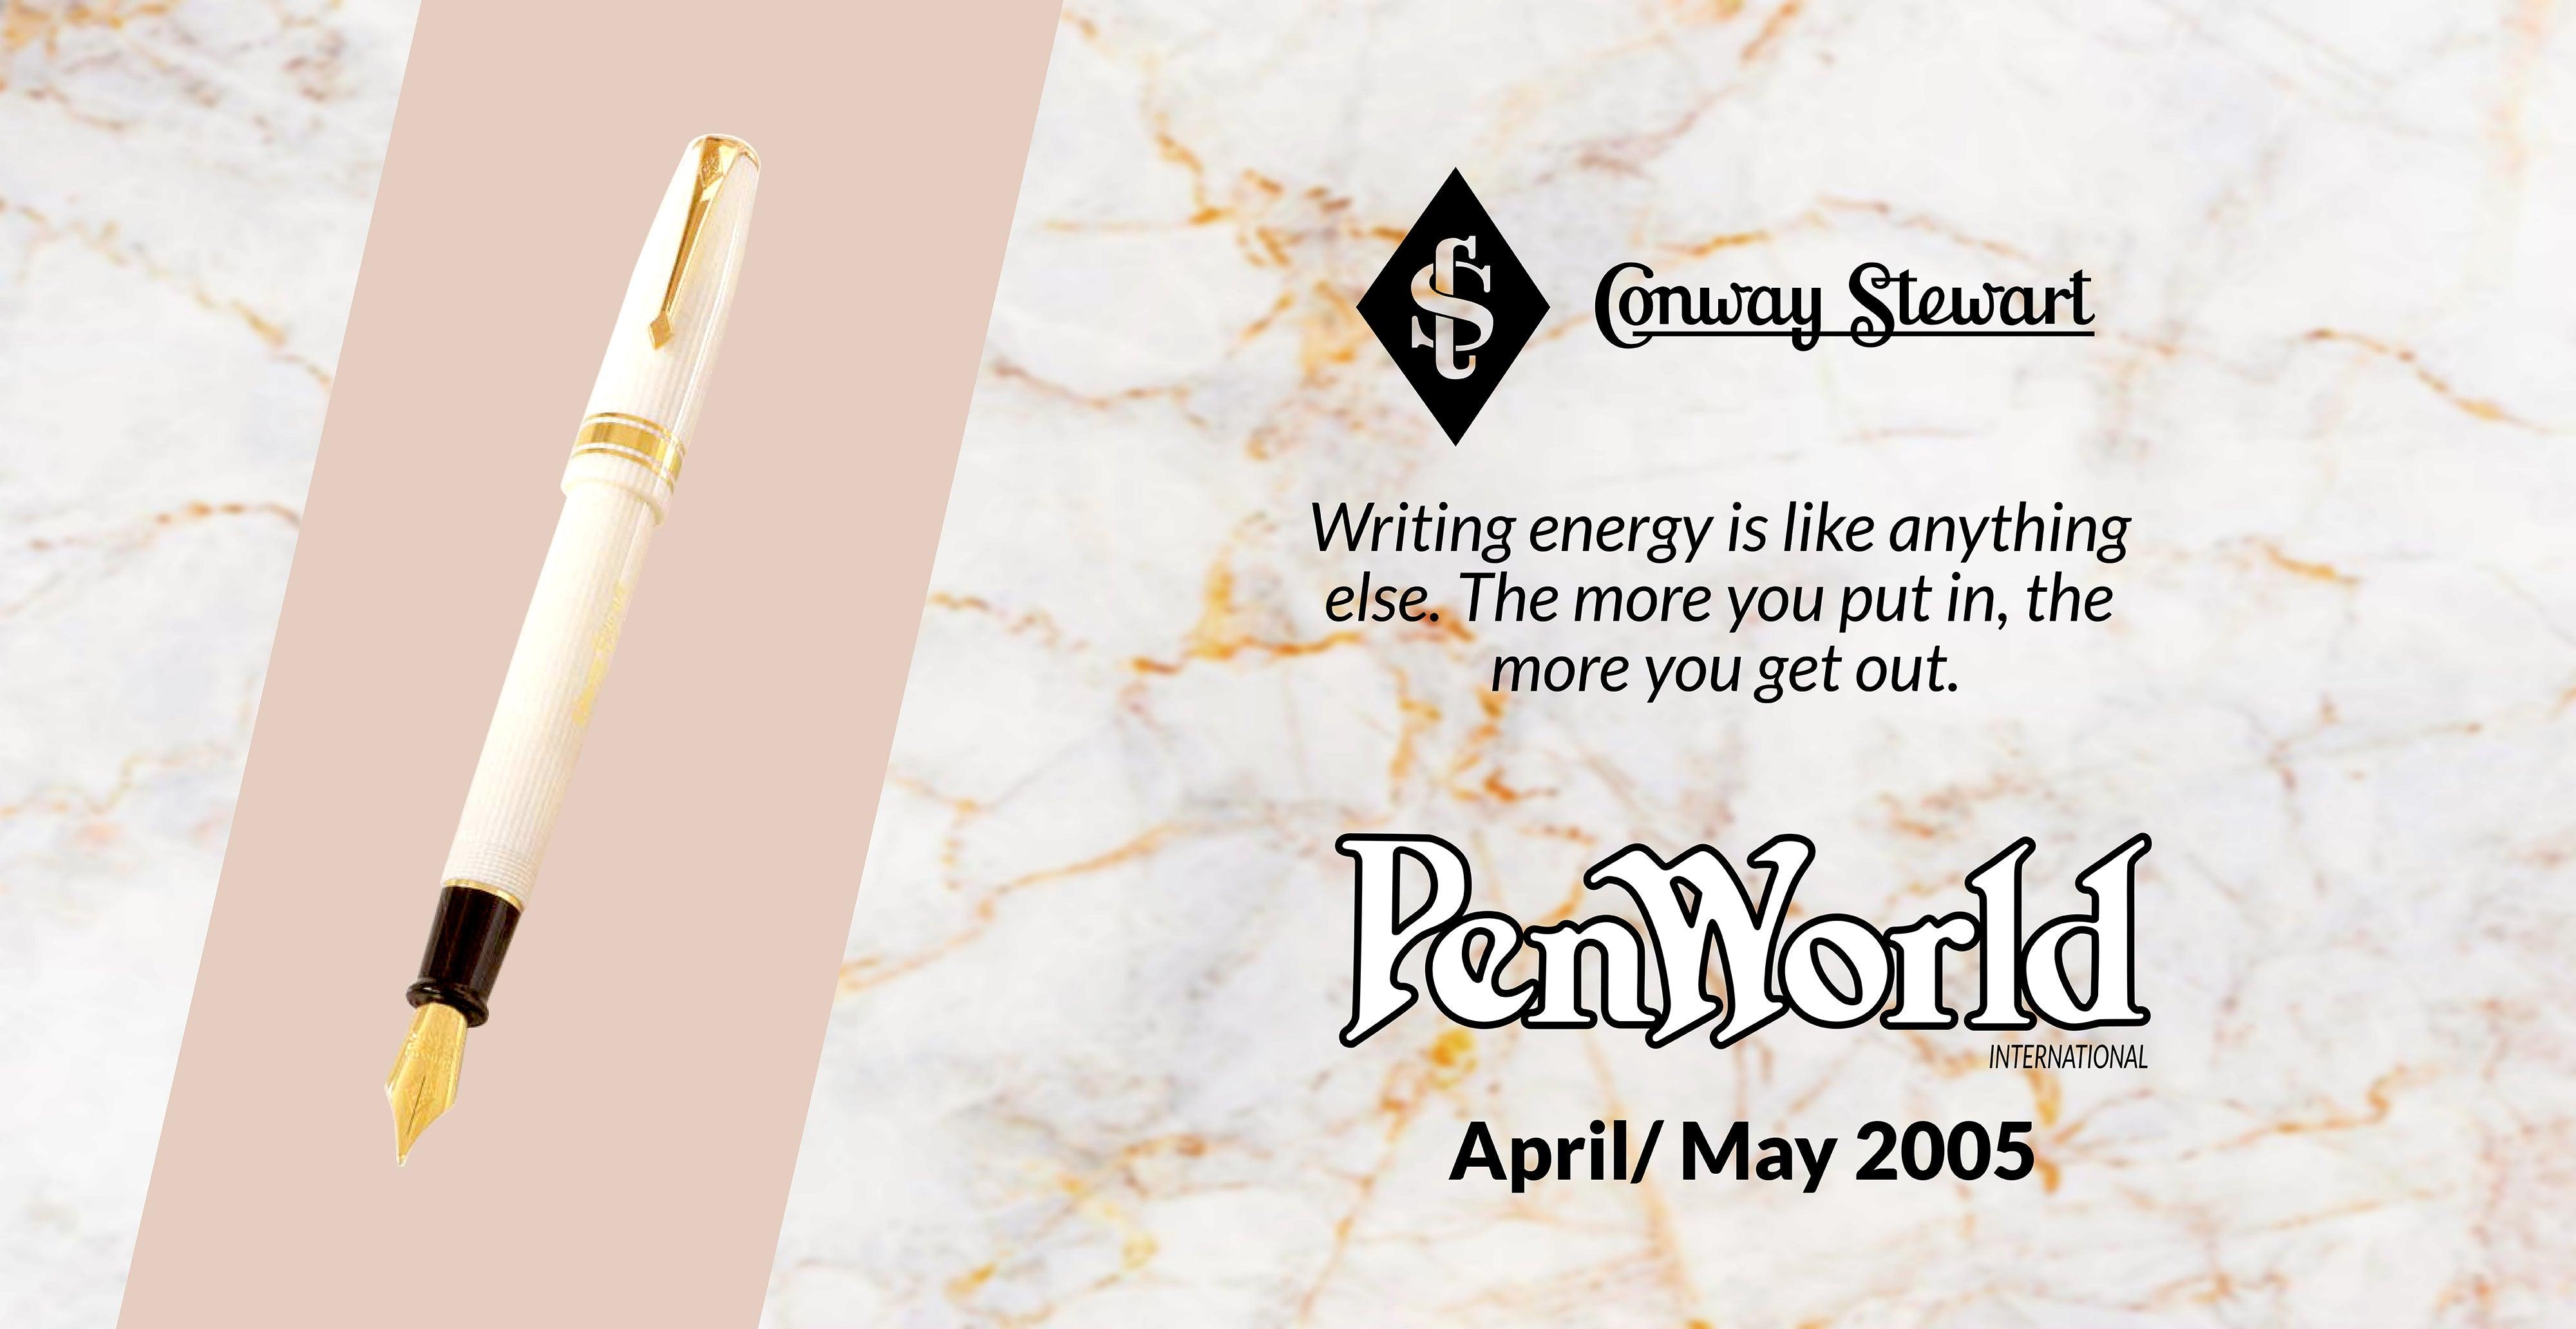 Pen World International April/ May 2005, 2007 - Conway Stewart